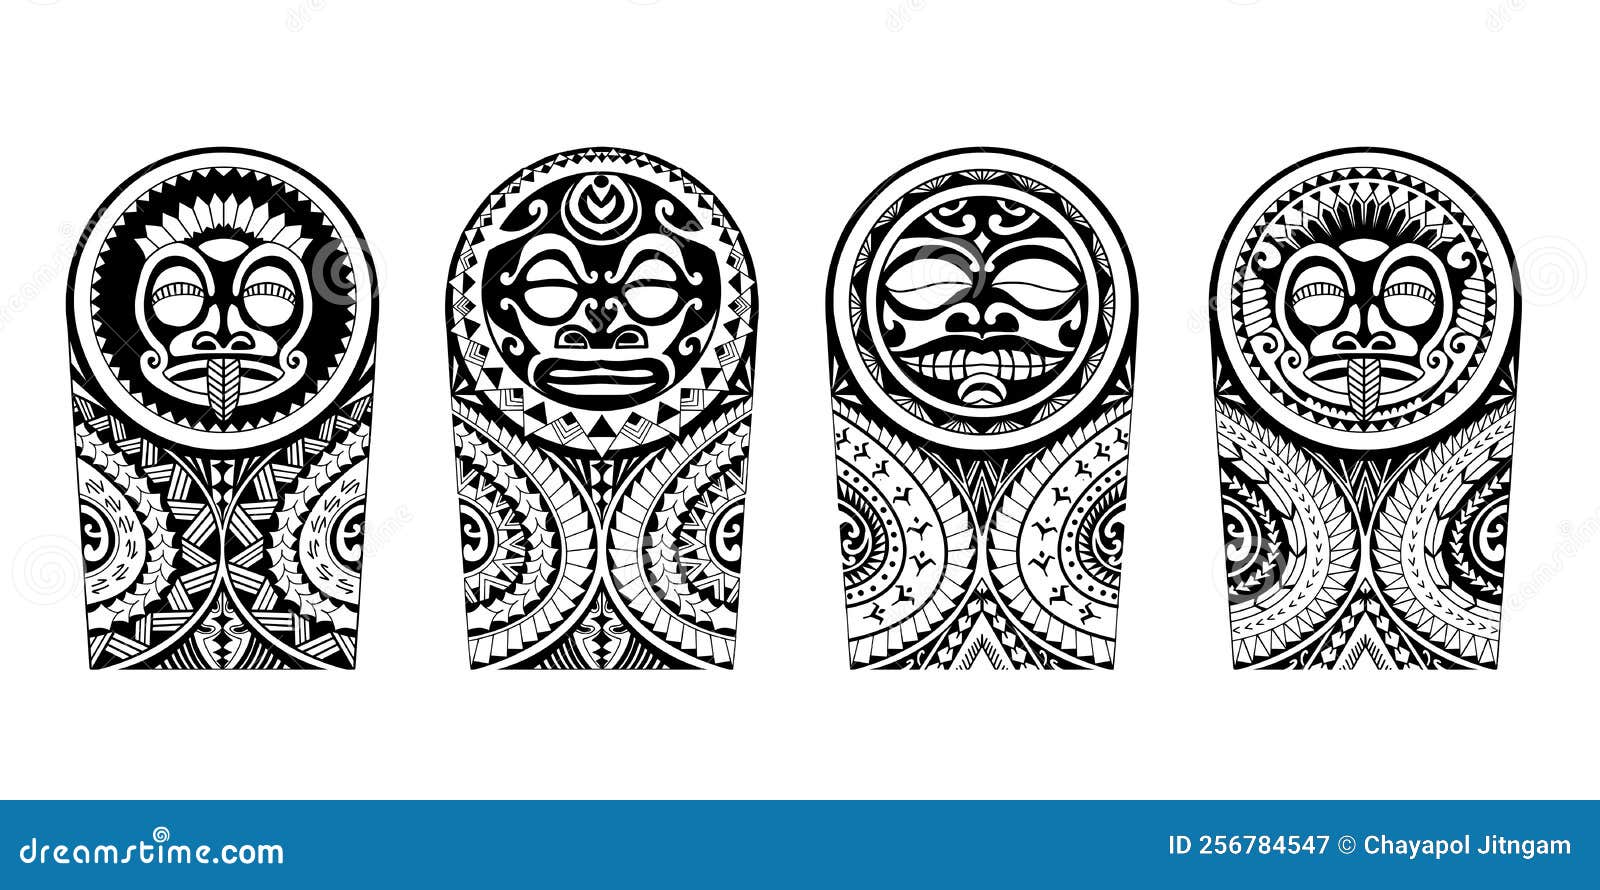 maori tattoo pattern logo design | Stable Diffusion